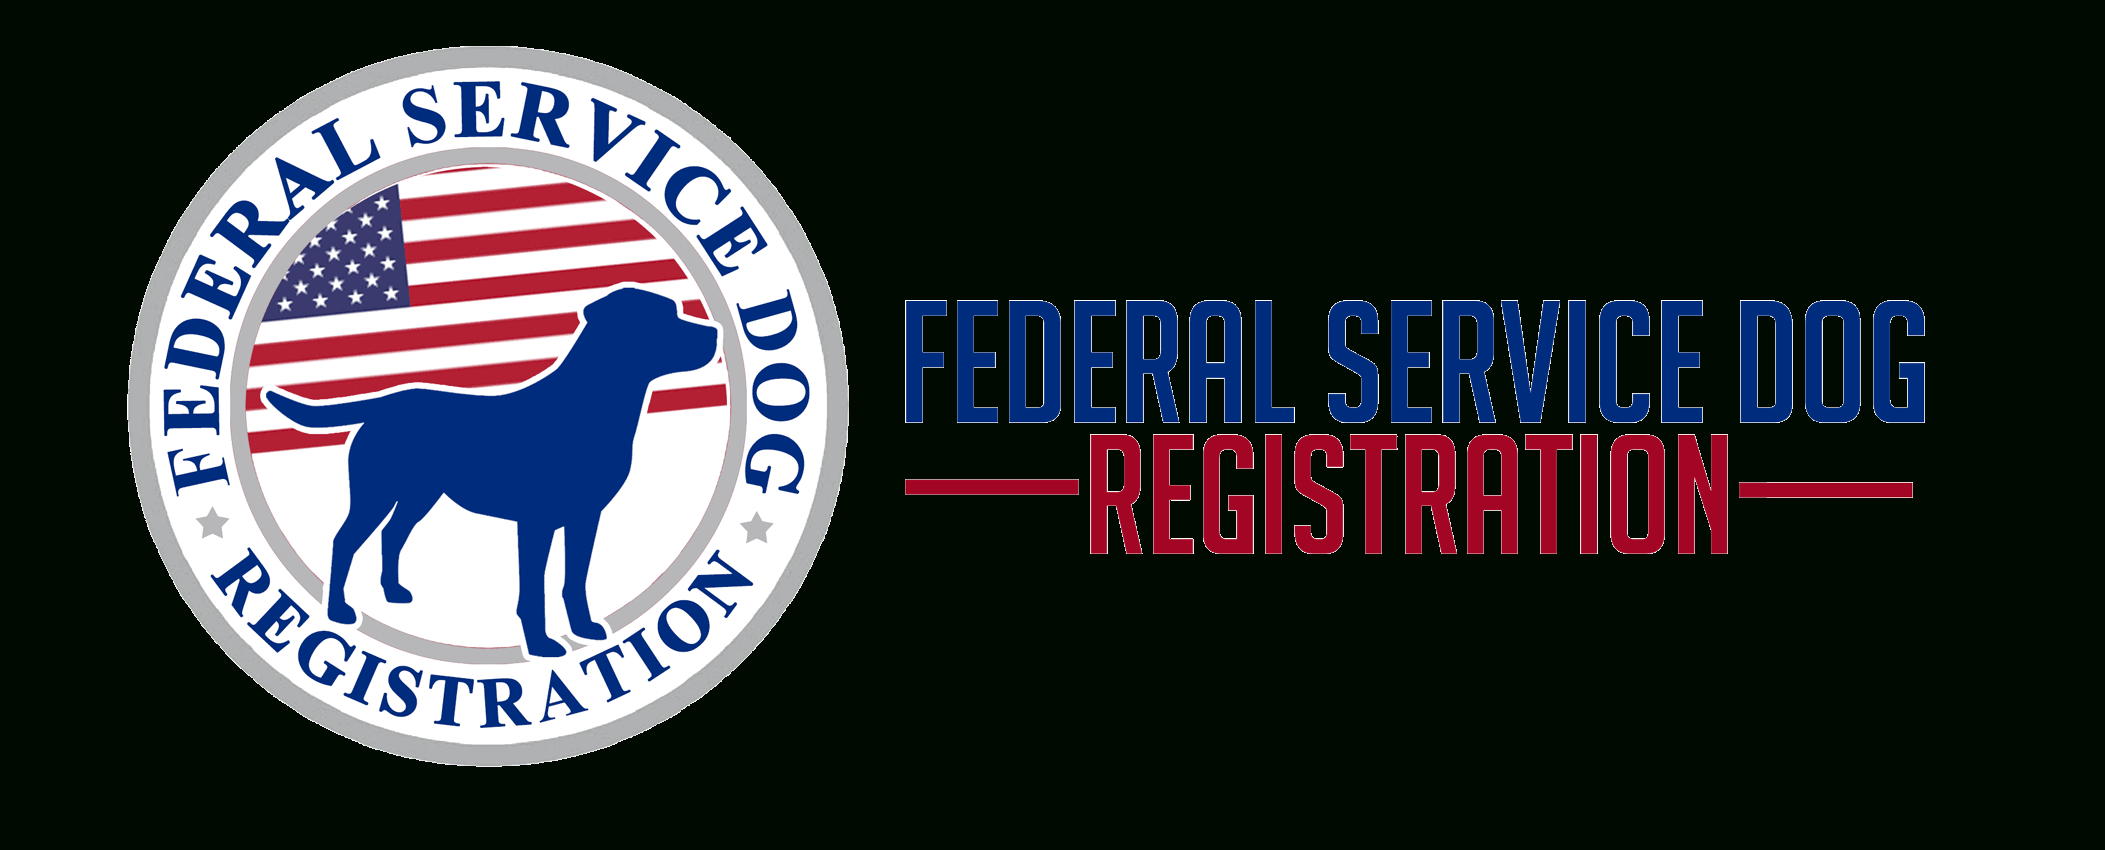 Free Service Dog Registration|Free Service Dog Certification Throughout Service Dog Certificate Template